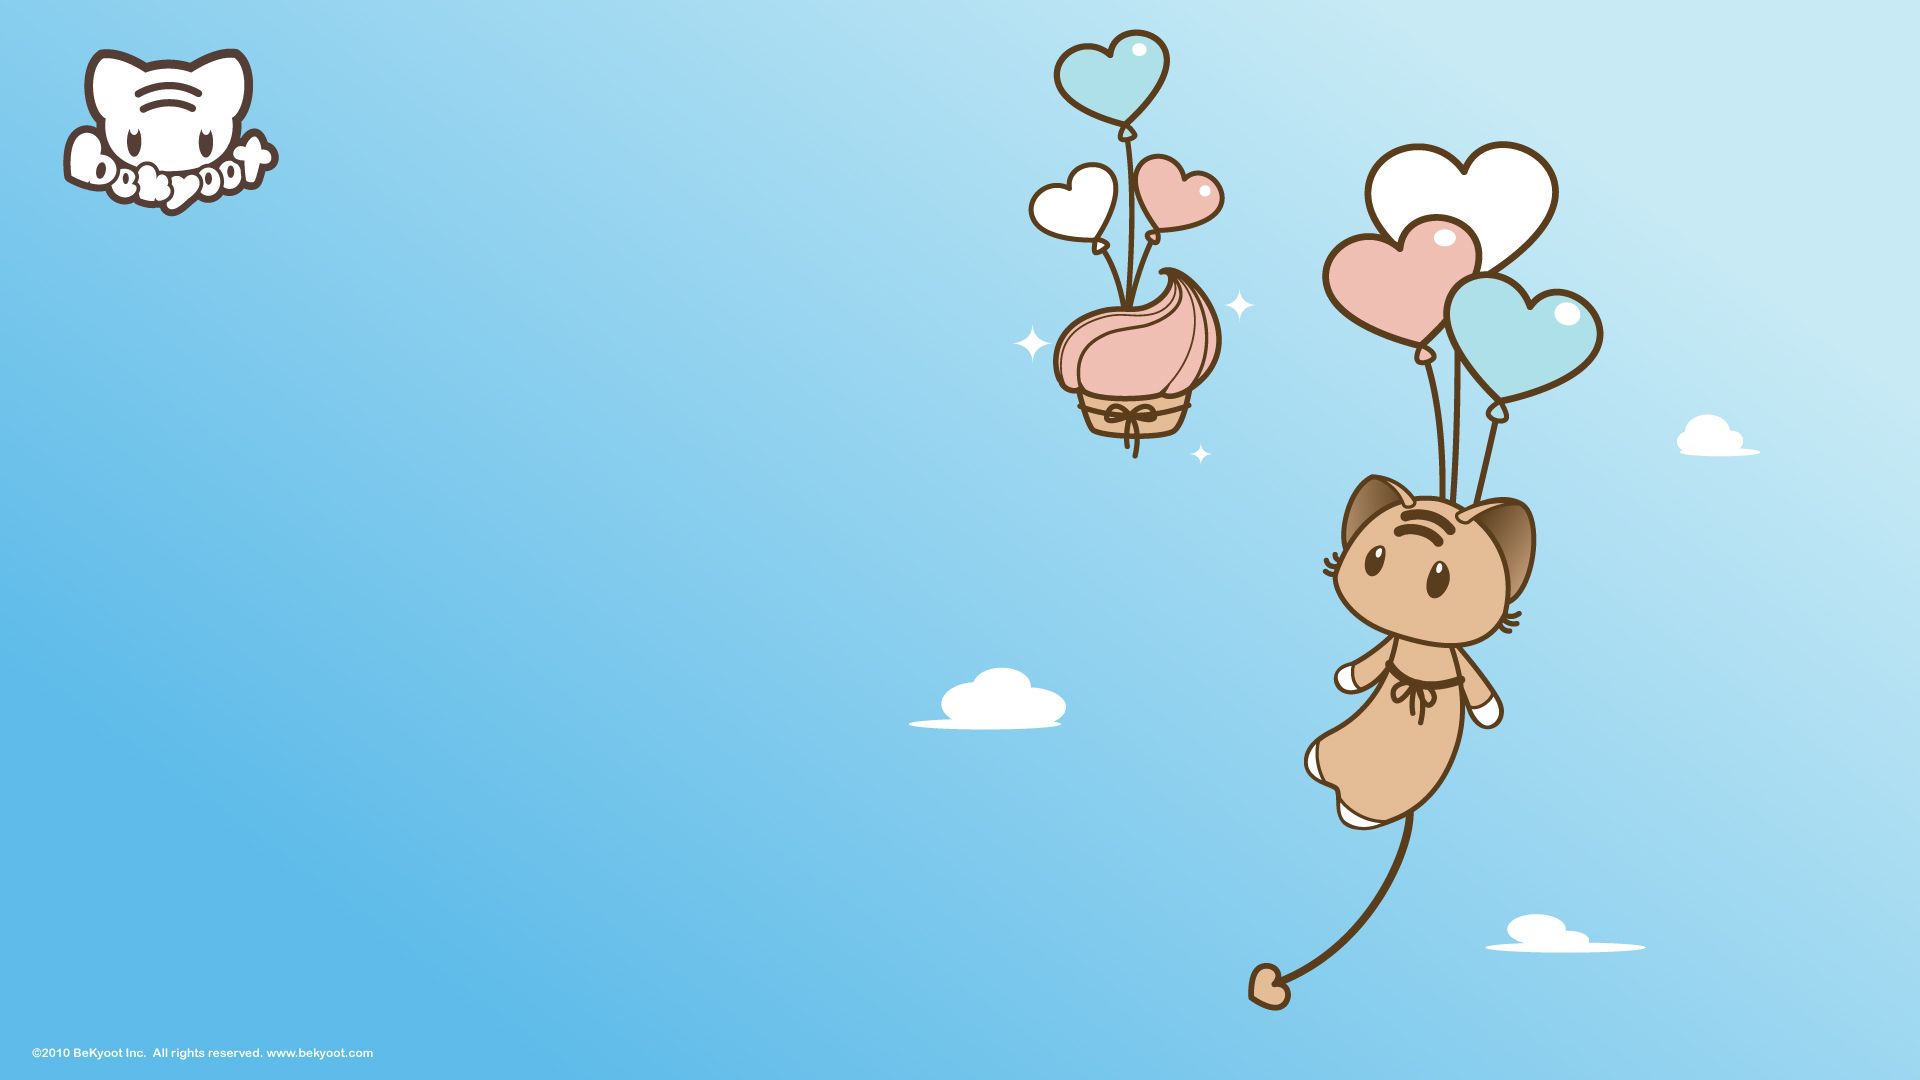 Cute wallpaper of a mouse holding balloons - Kawaii